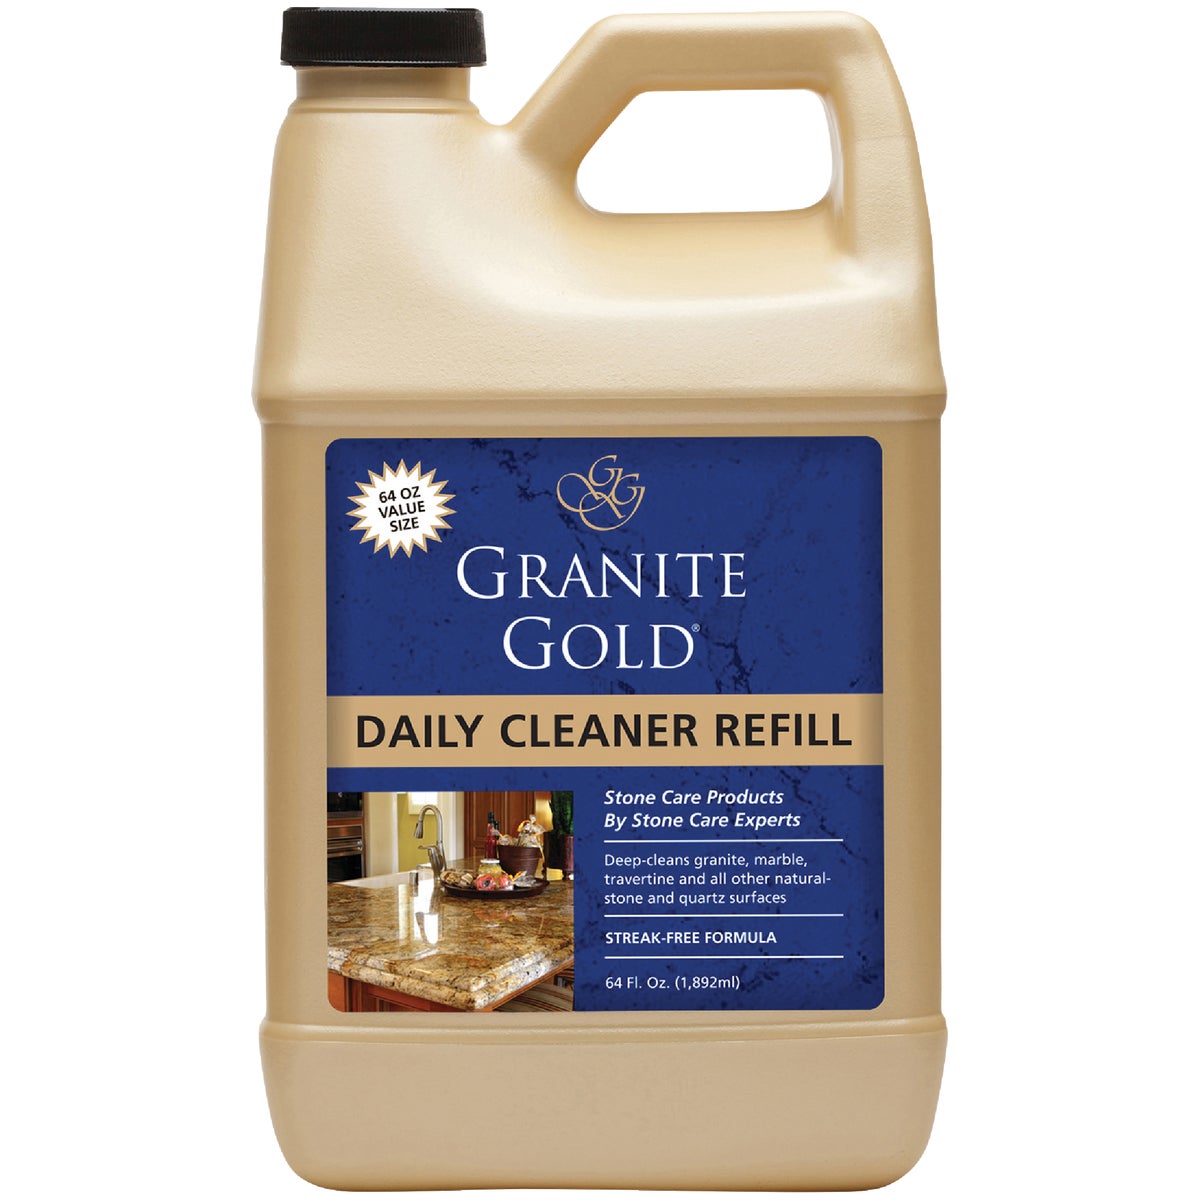 Granite Gold 64 Oz. Refill Daily Granite Cleaner